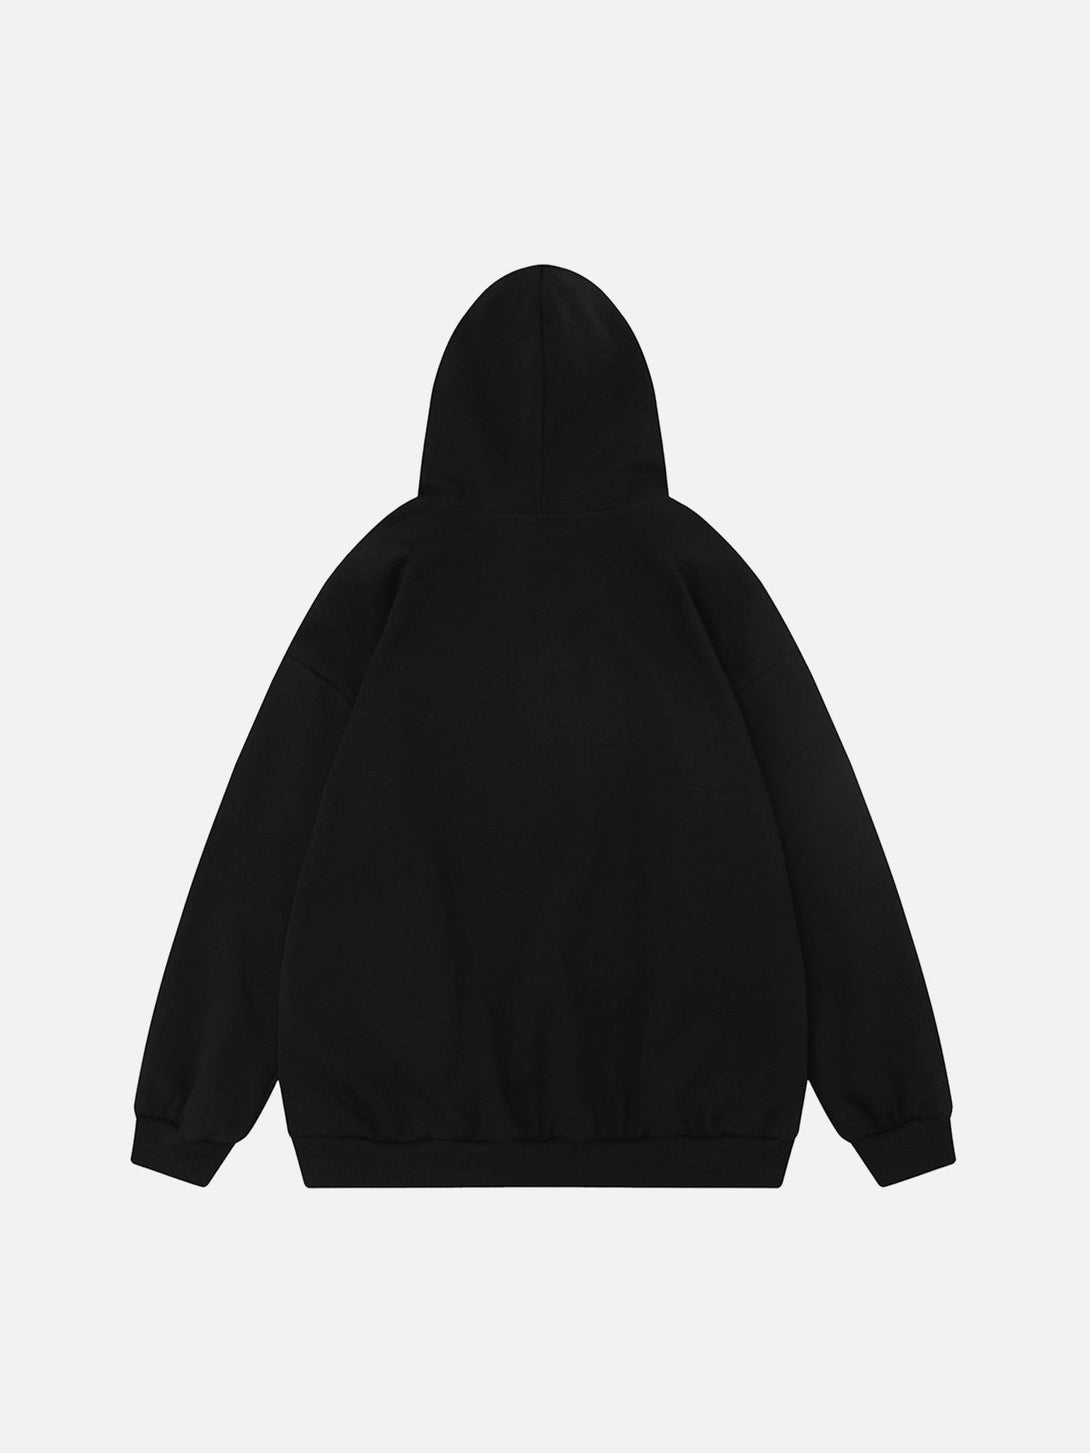 Majesda® - Mannequin Ghost Hooded Sweatshirt- Outfit Ideas - Streetwear Fashion - majesda.com